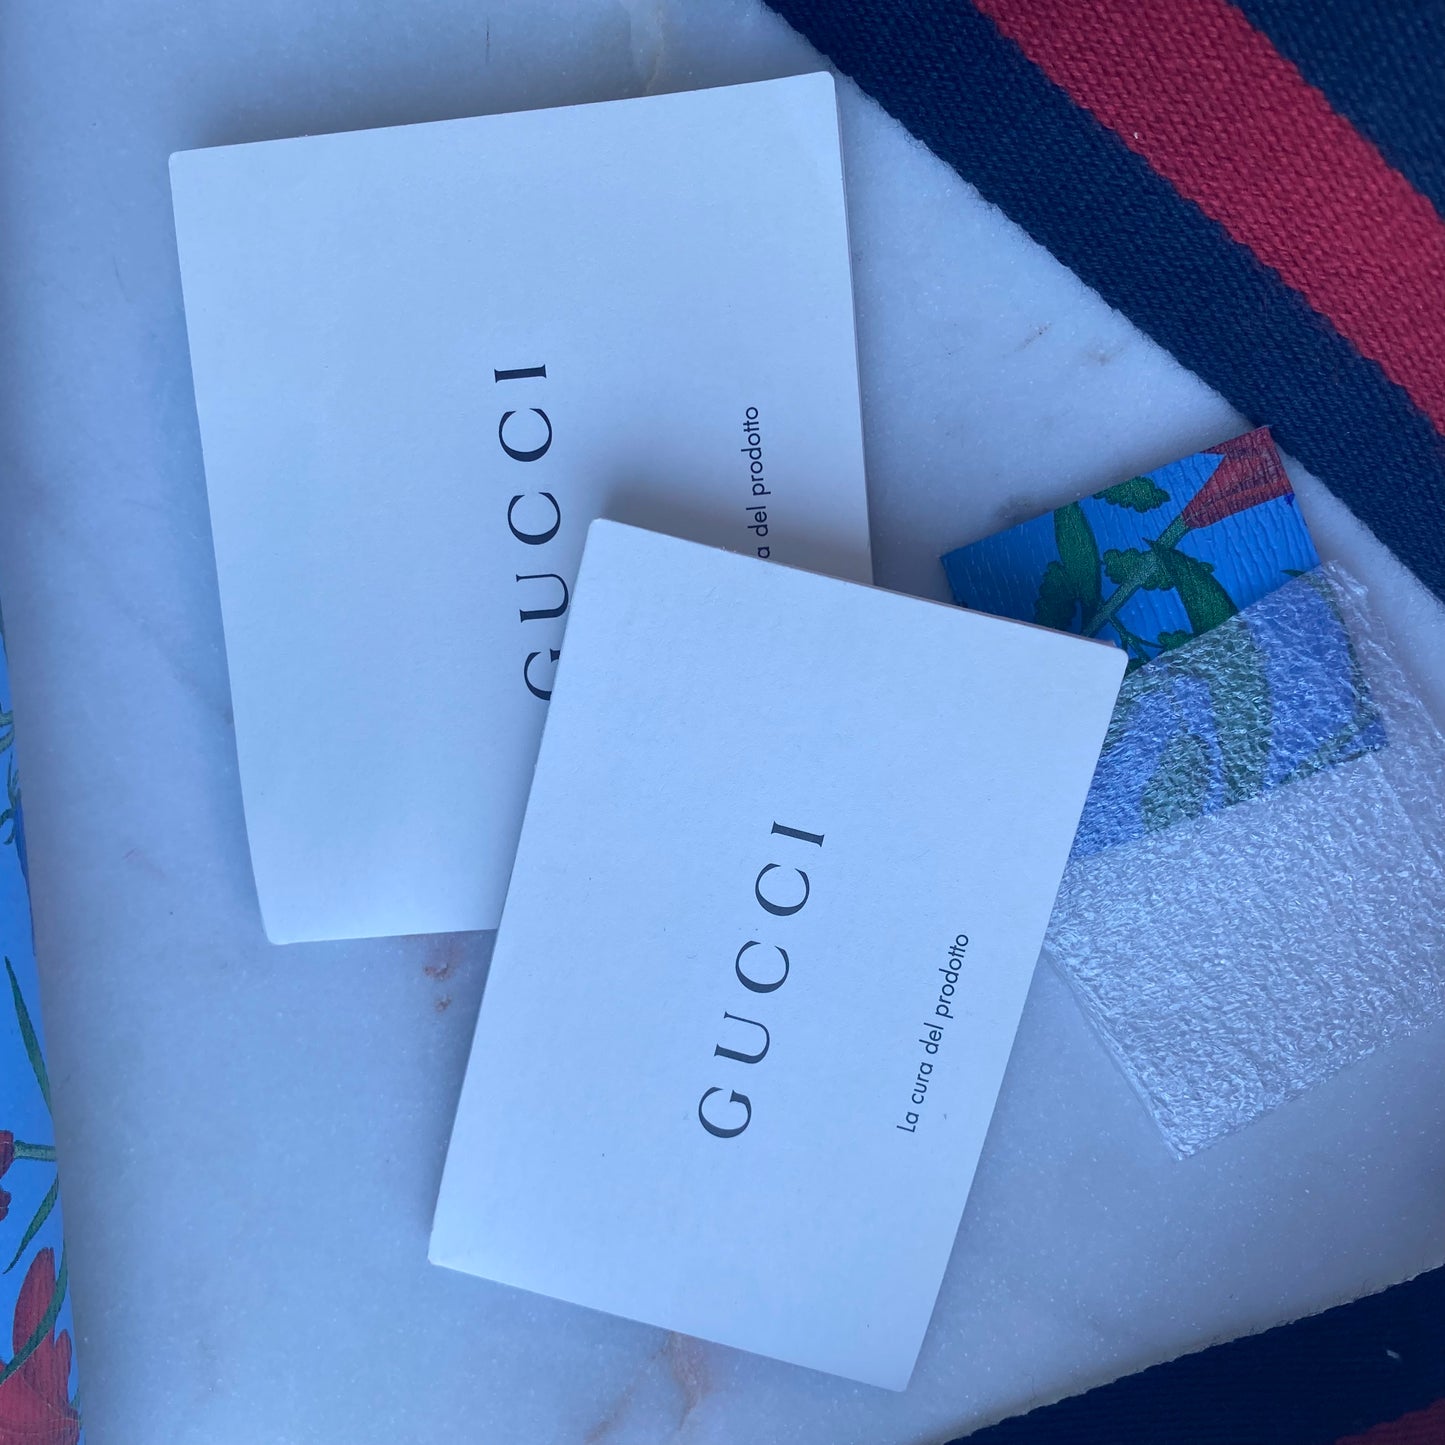 Gucci Nymphaea Top Handle Bag Floral Printed Leather Shoulder Bag